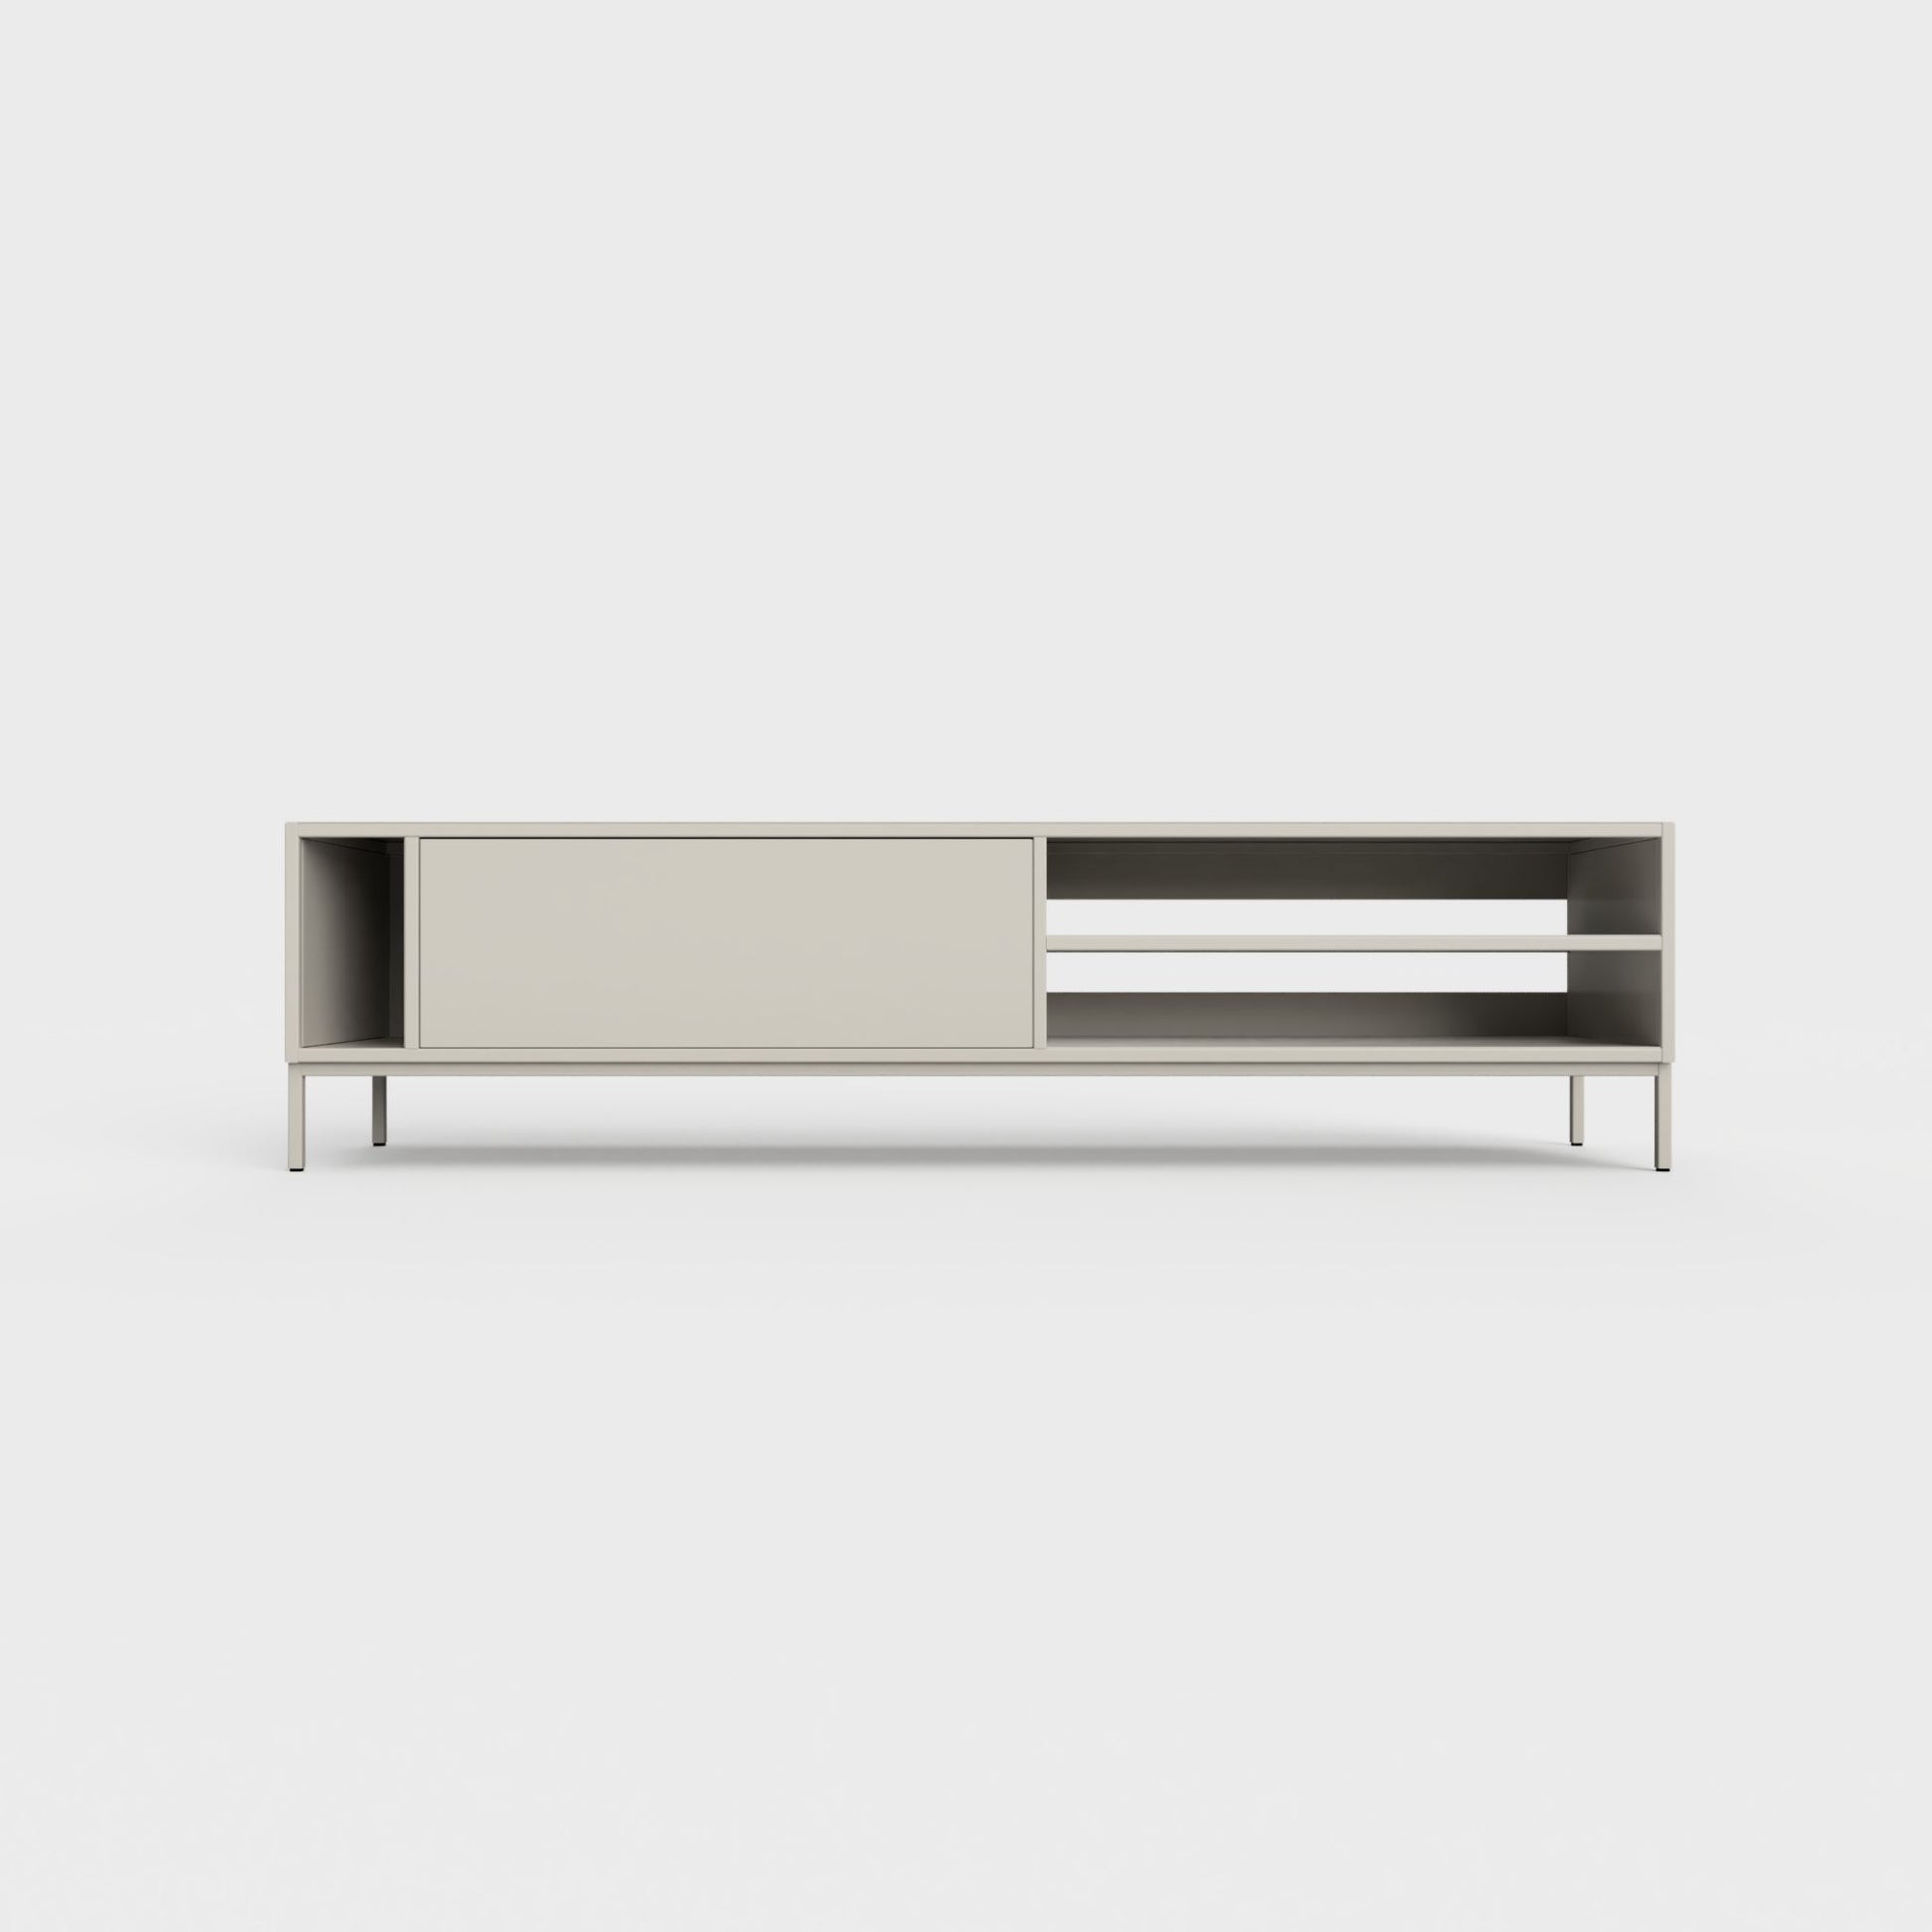 Prunus 03 Lowboard in light beige, powder-coated steel, elegant and modern piece of furniture for your living room